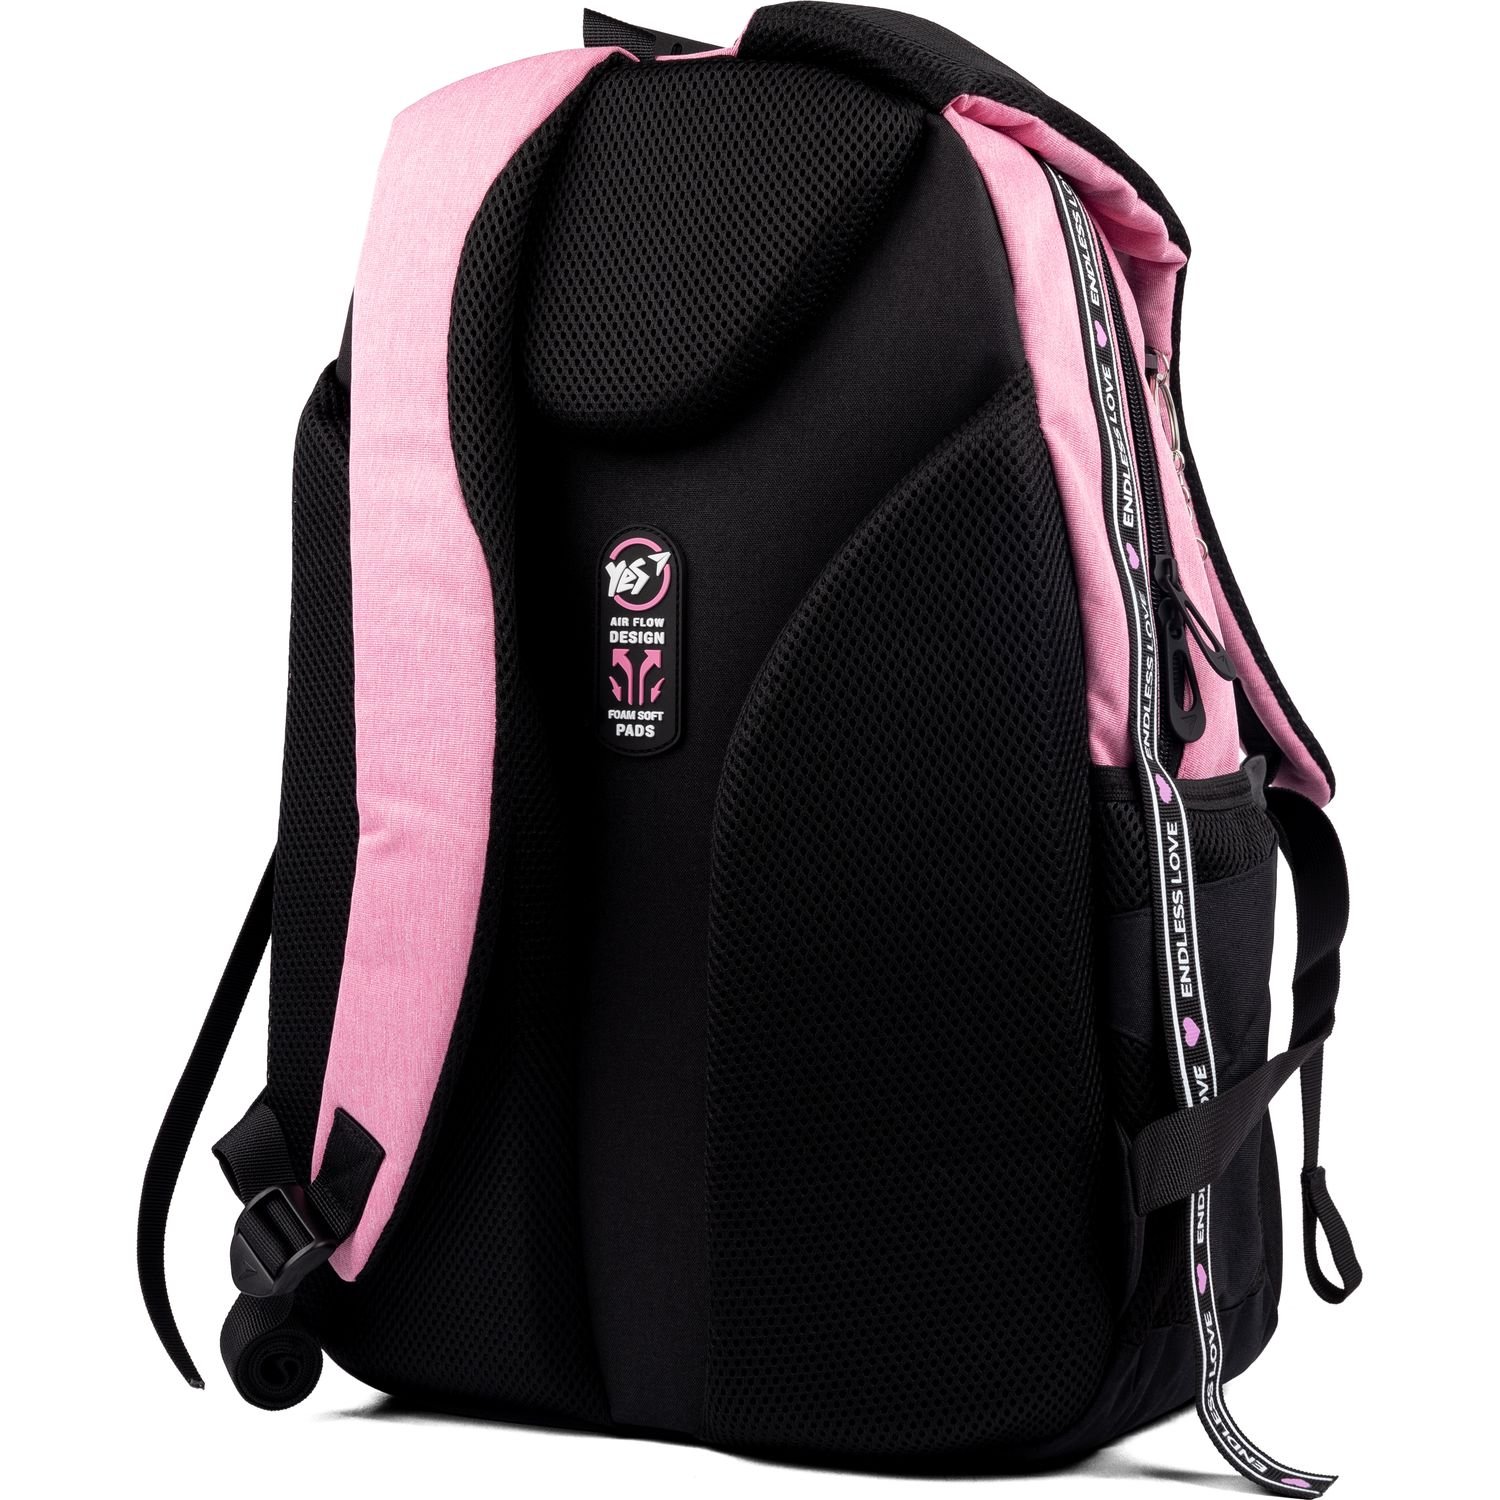 Рюкзак Yes TS-61 Girl Wonderful, черный с розовым (558908) - фото 4